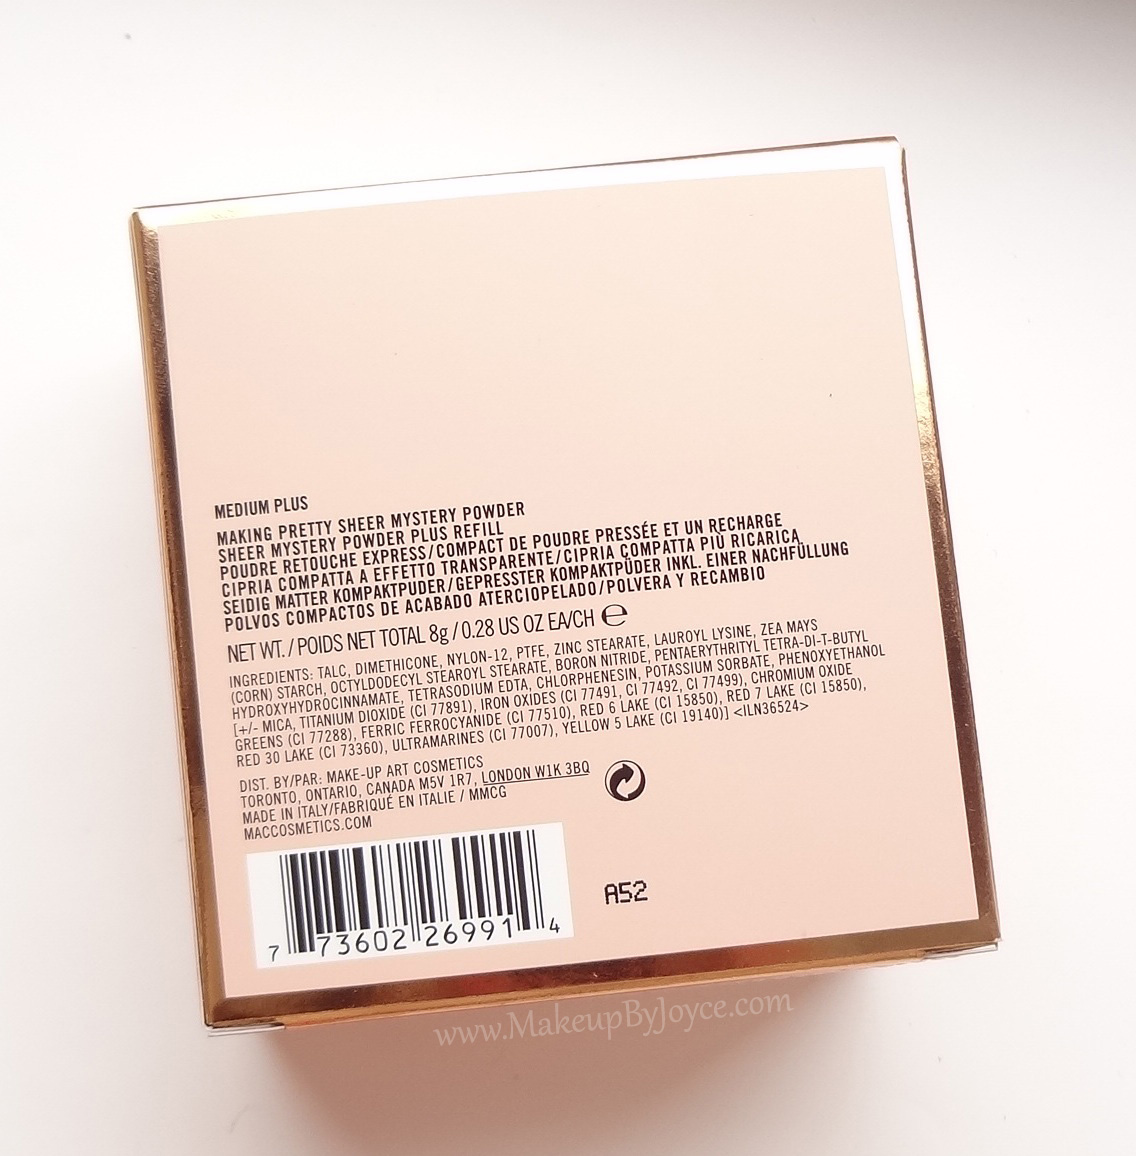 MakeupByJoyce ** !: MAC Making Pretty Sheer Mystery Powder in Medium ...